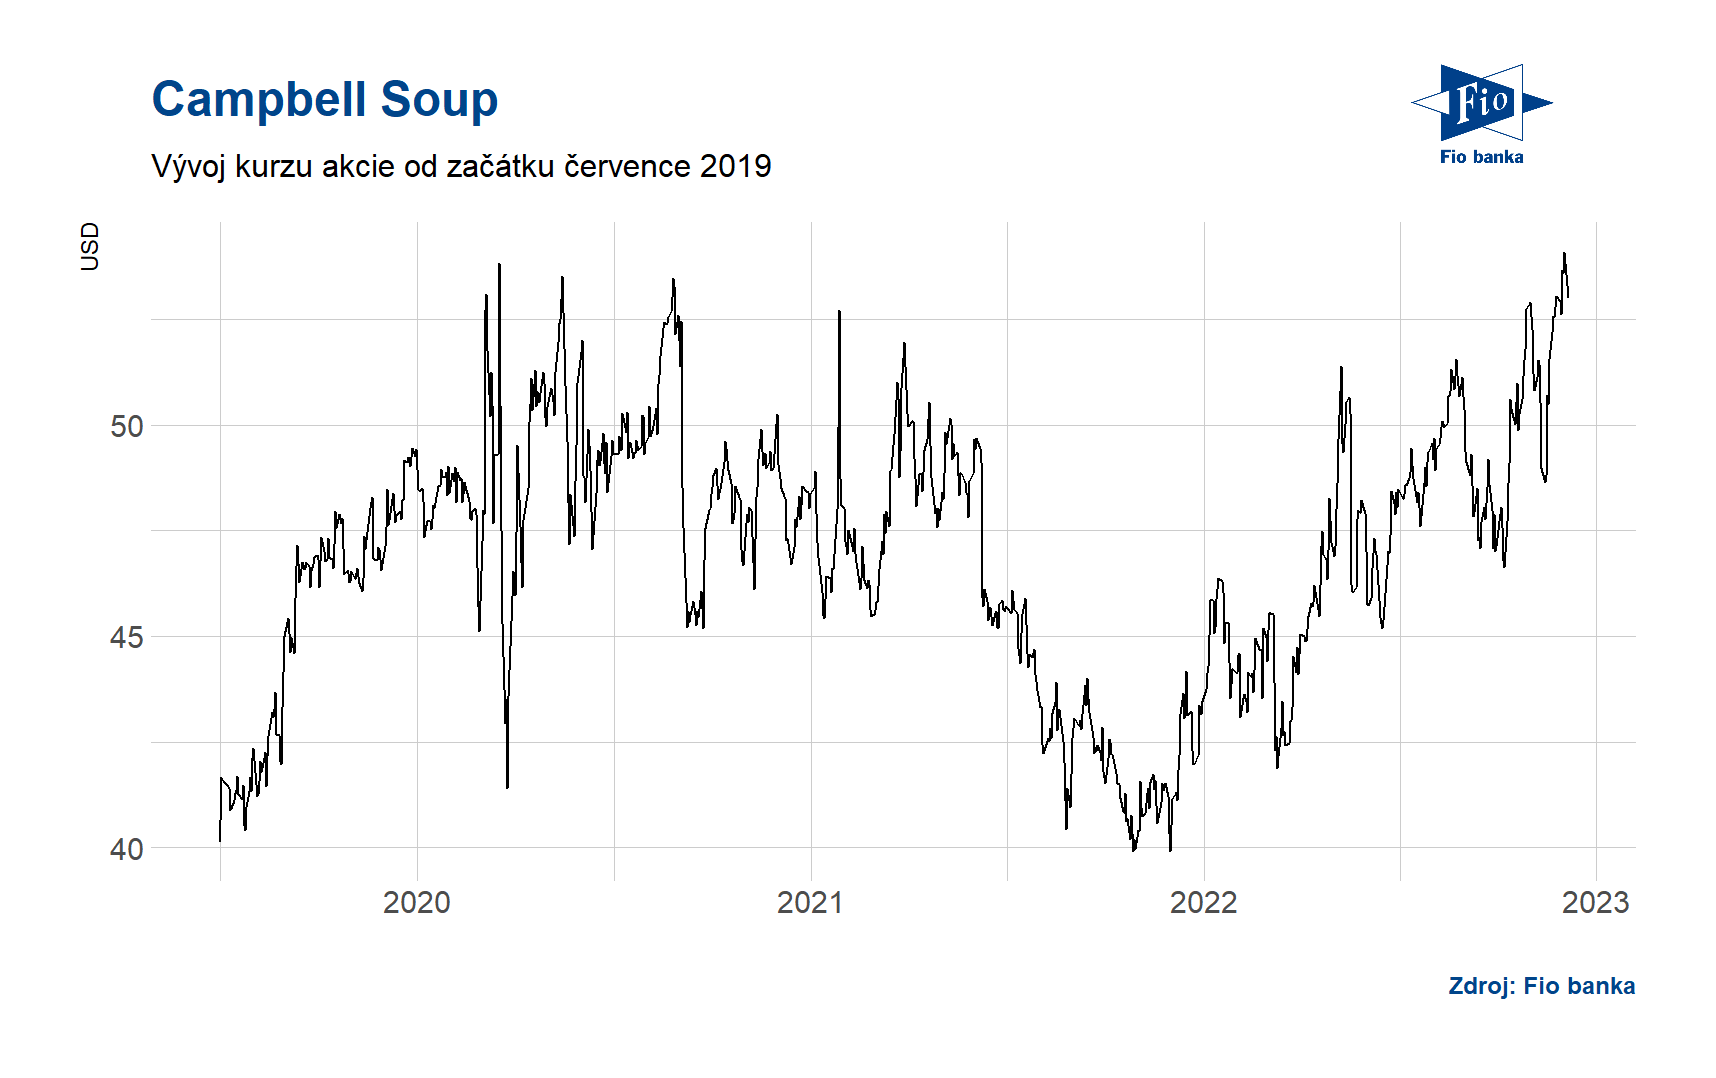 Vývoj ceny akcie Campbell Soup. Zdroj: Bloomberg